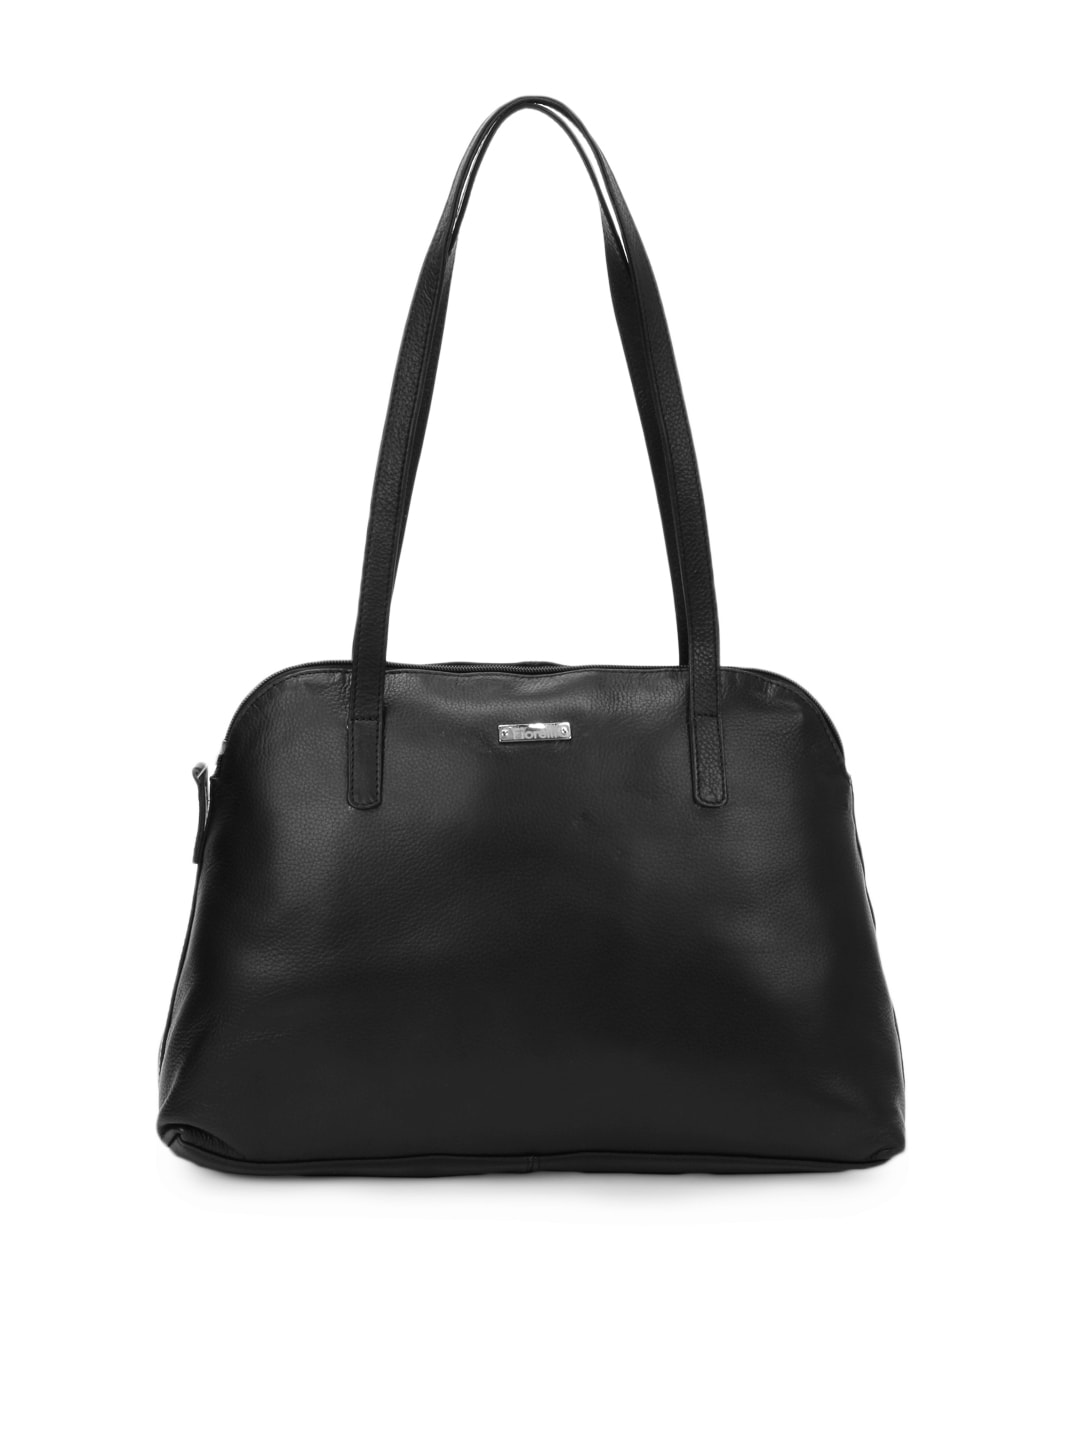 Fiorelli Women Black Leather Handbag